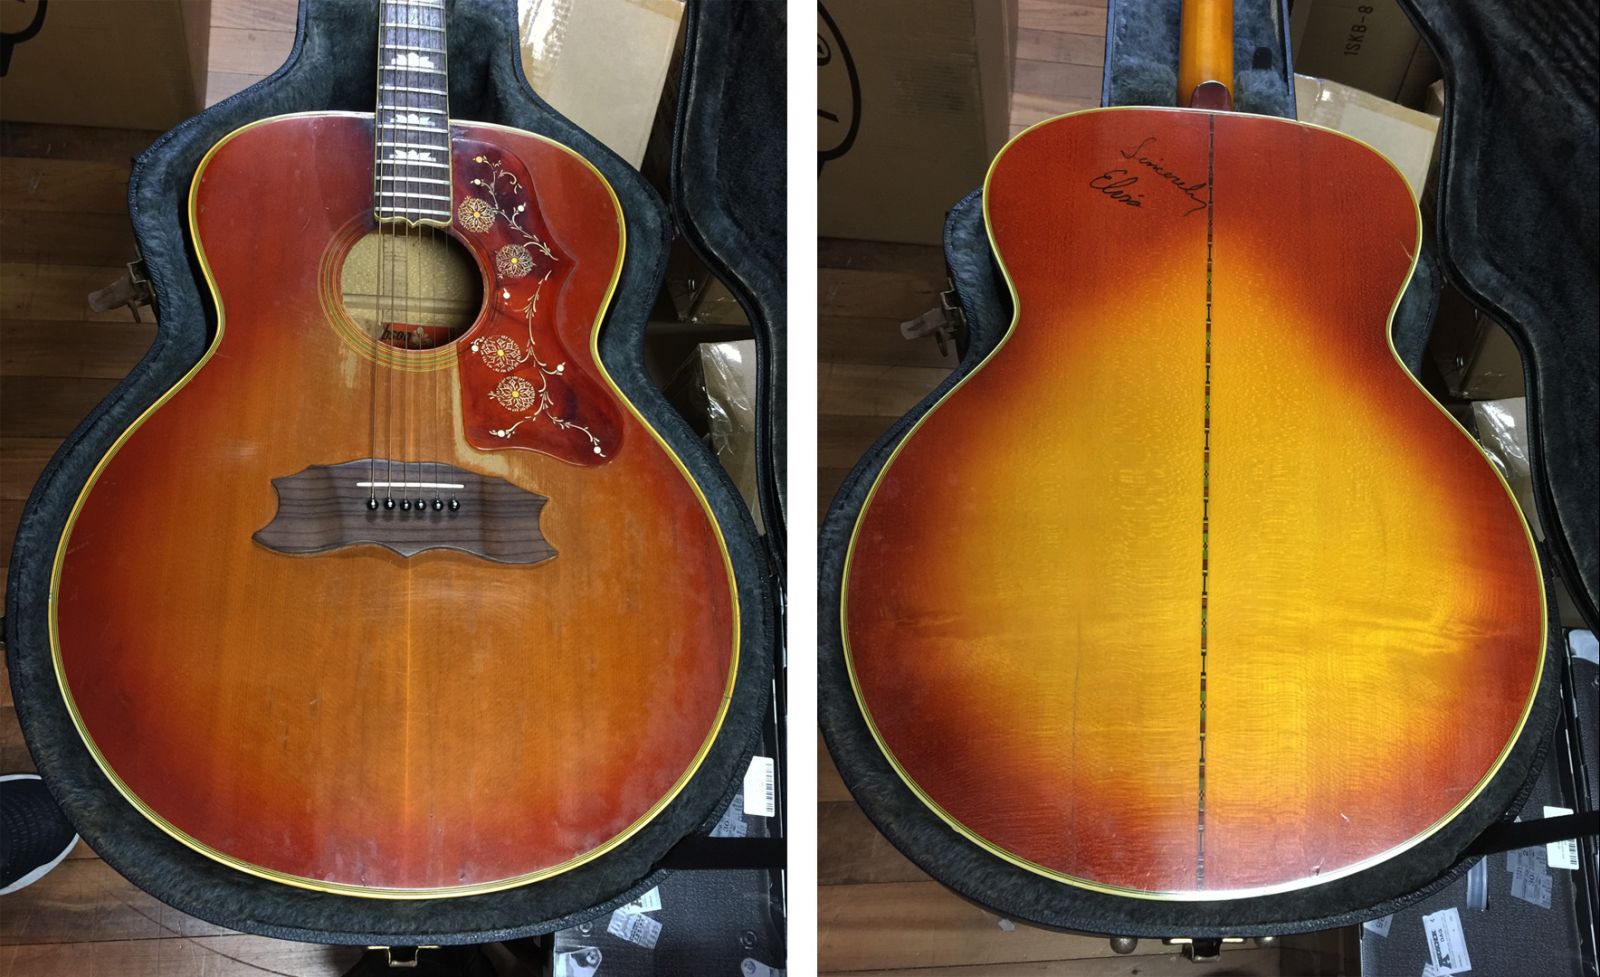 Gold Coast Music store's signed, vintage Elvis Presley Gibson J-200 acoustic guitar